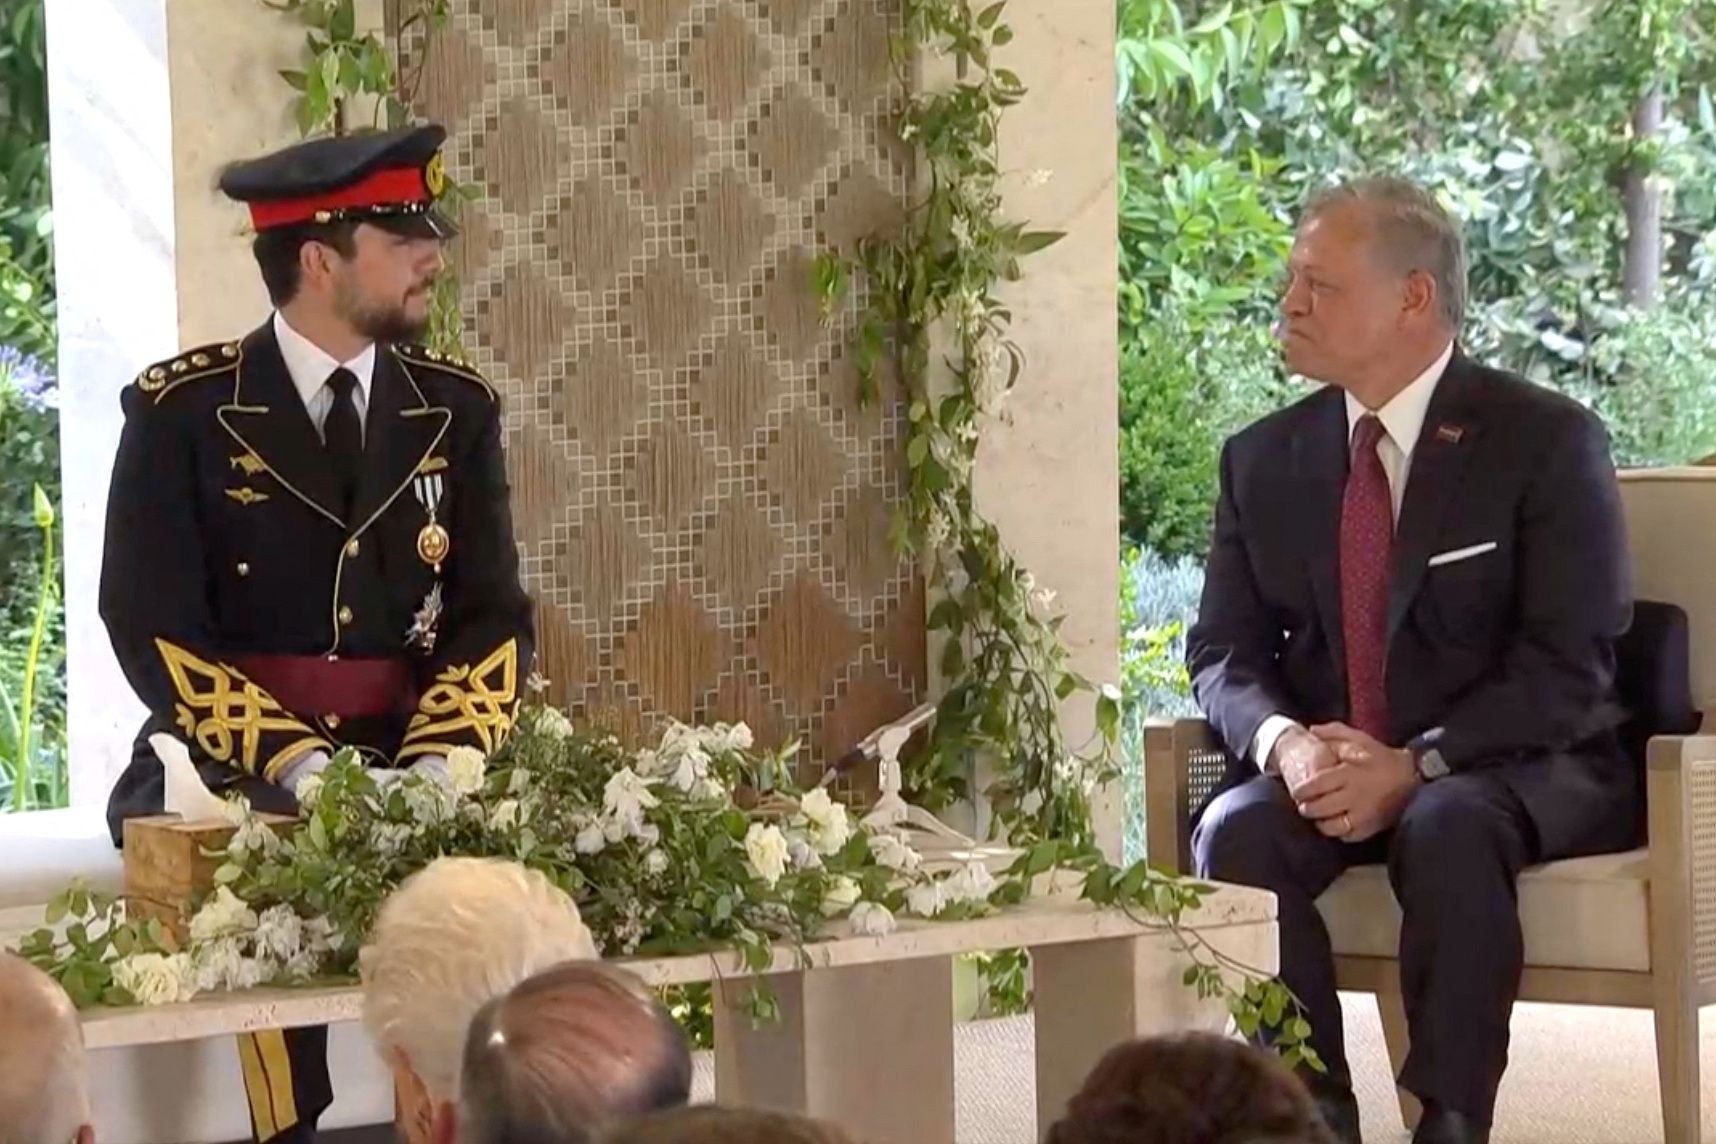 jordanian royal family pays tribute to princess rajwa al hussein on her 30th birthday